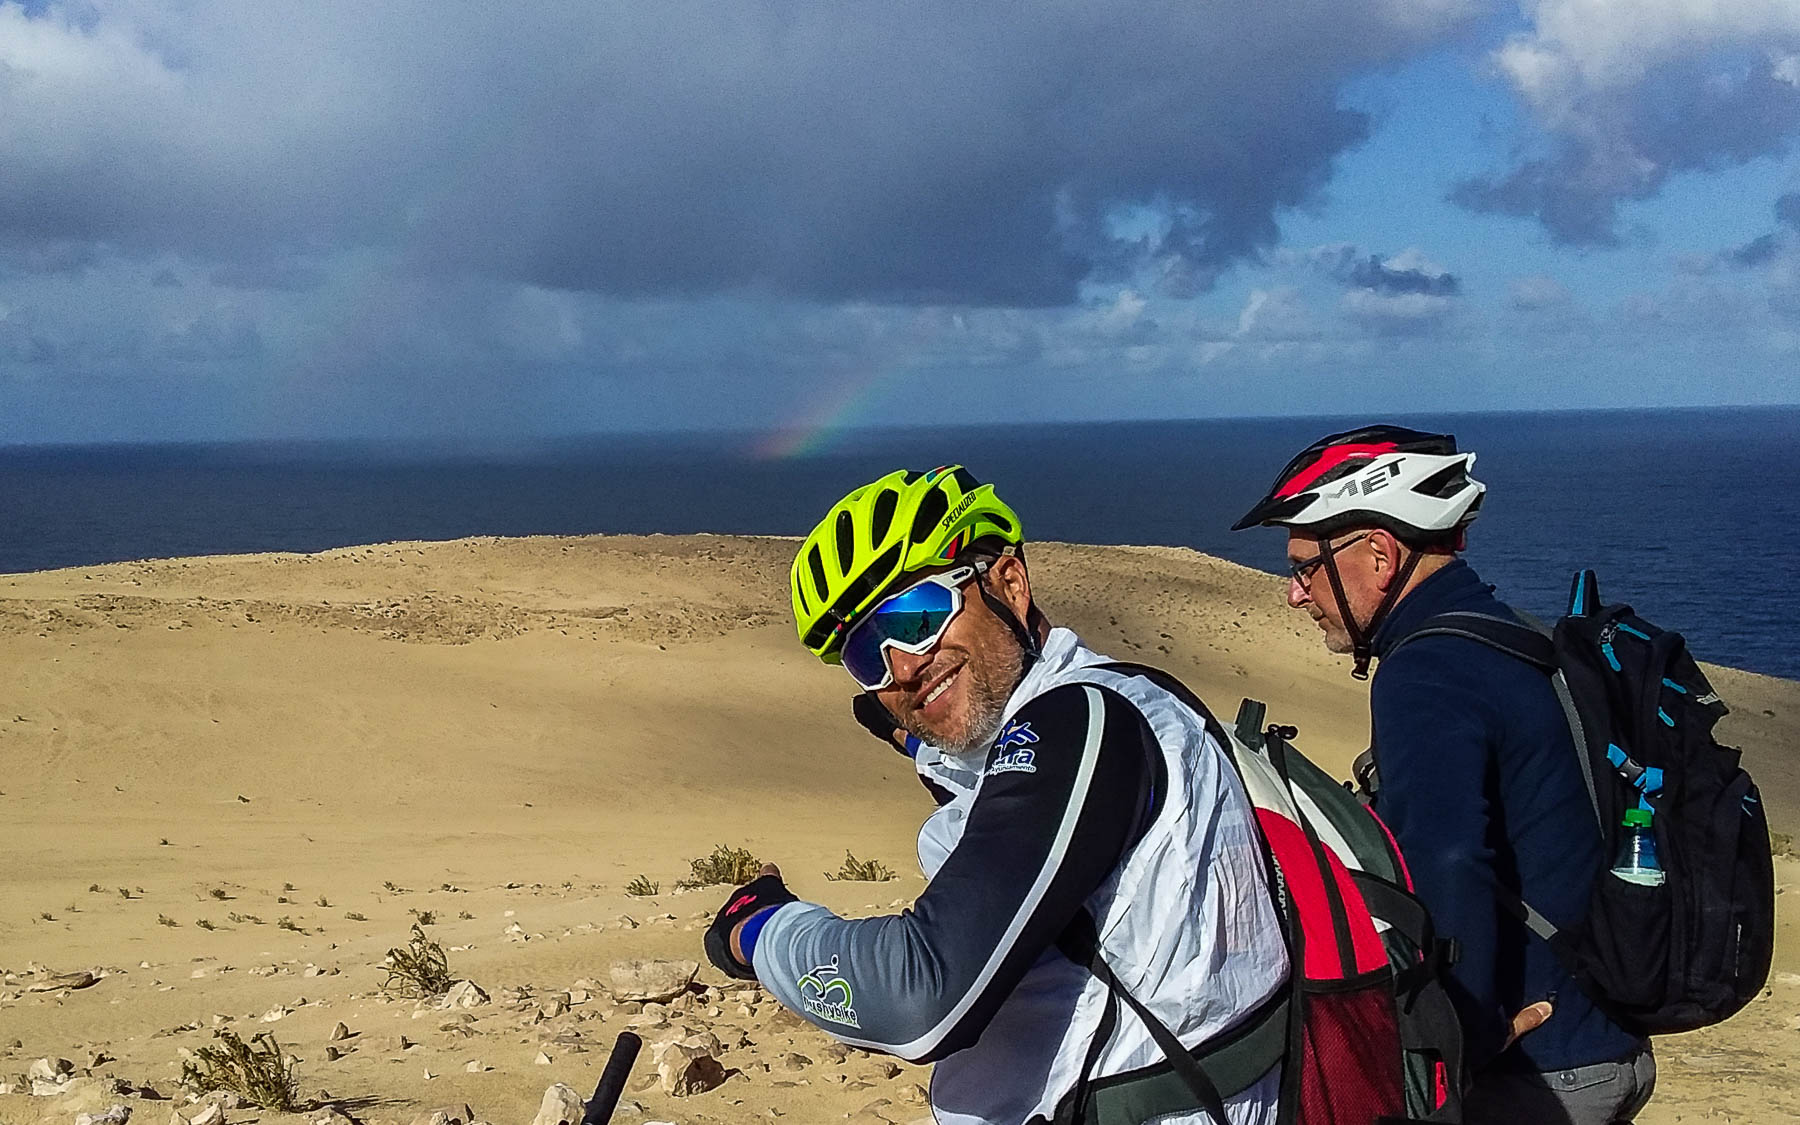 Mountainbike Tours Fuerteventura